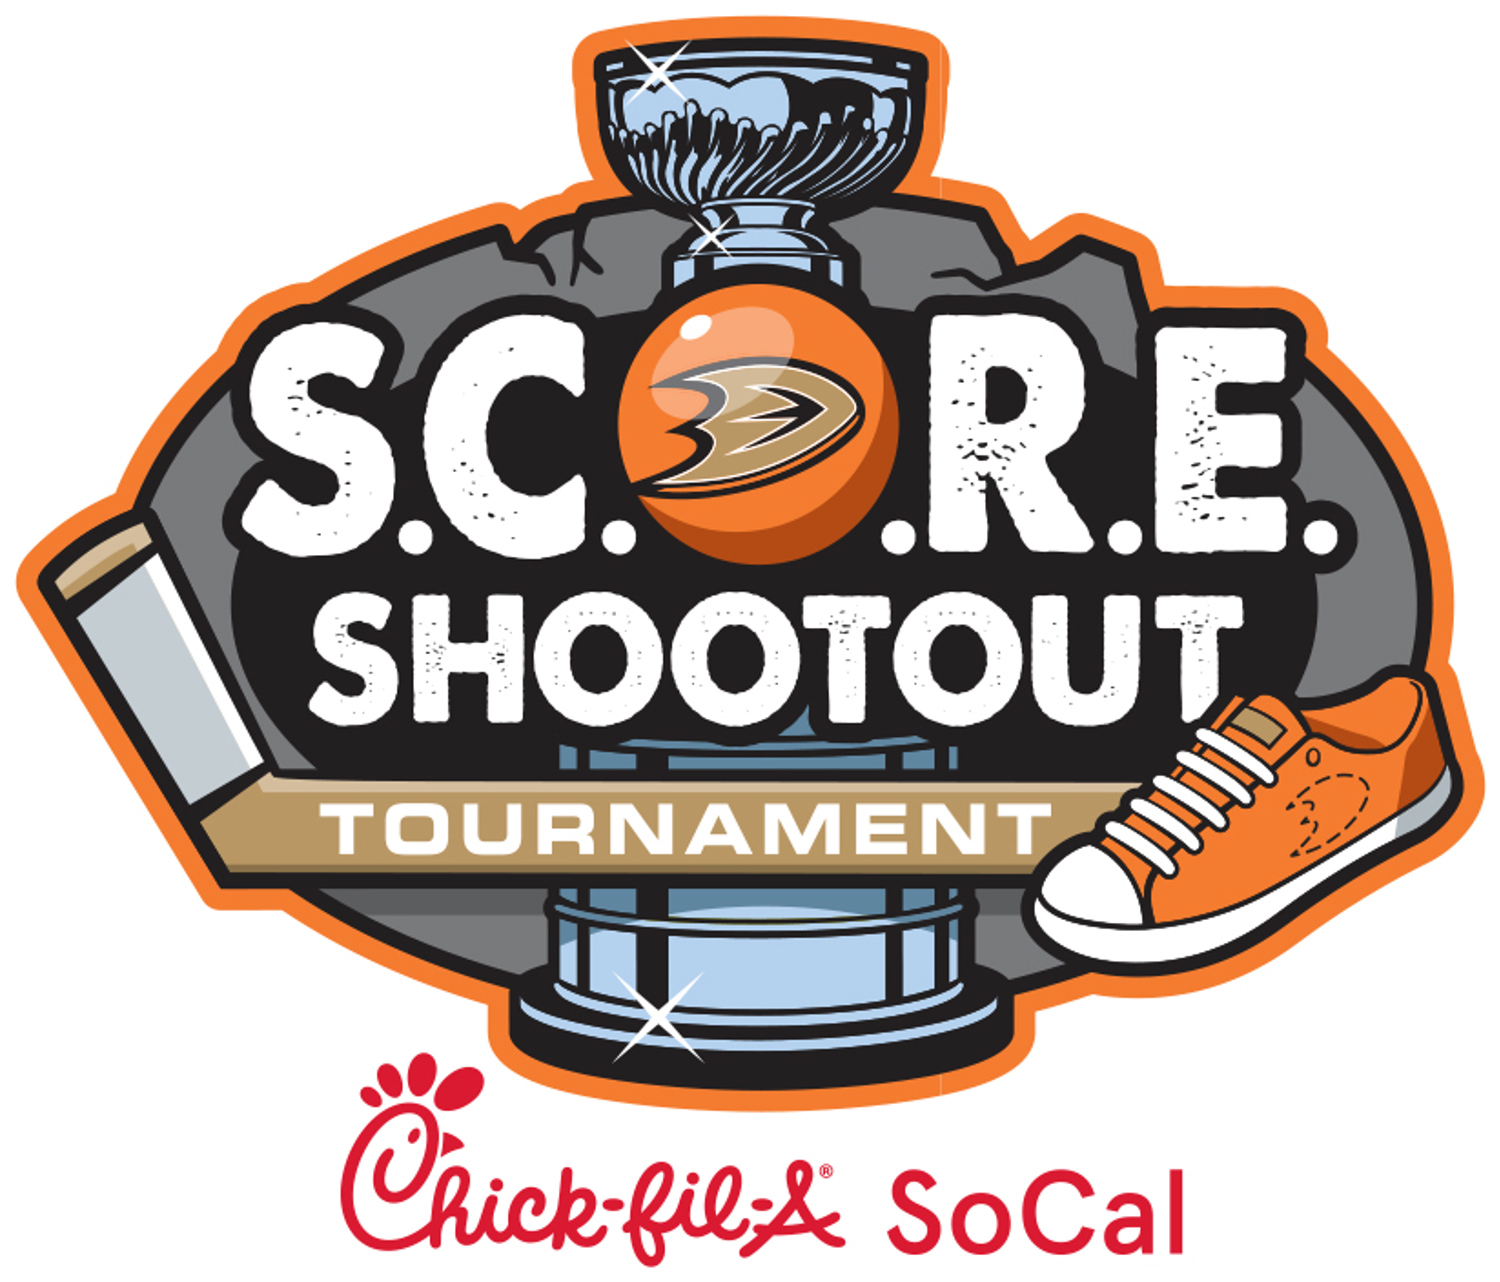 SCORE Shootout Tournament Logo presented by Chic Fil A SoCal